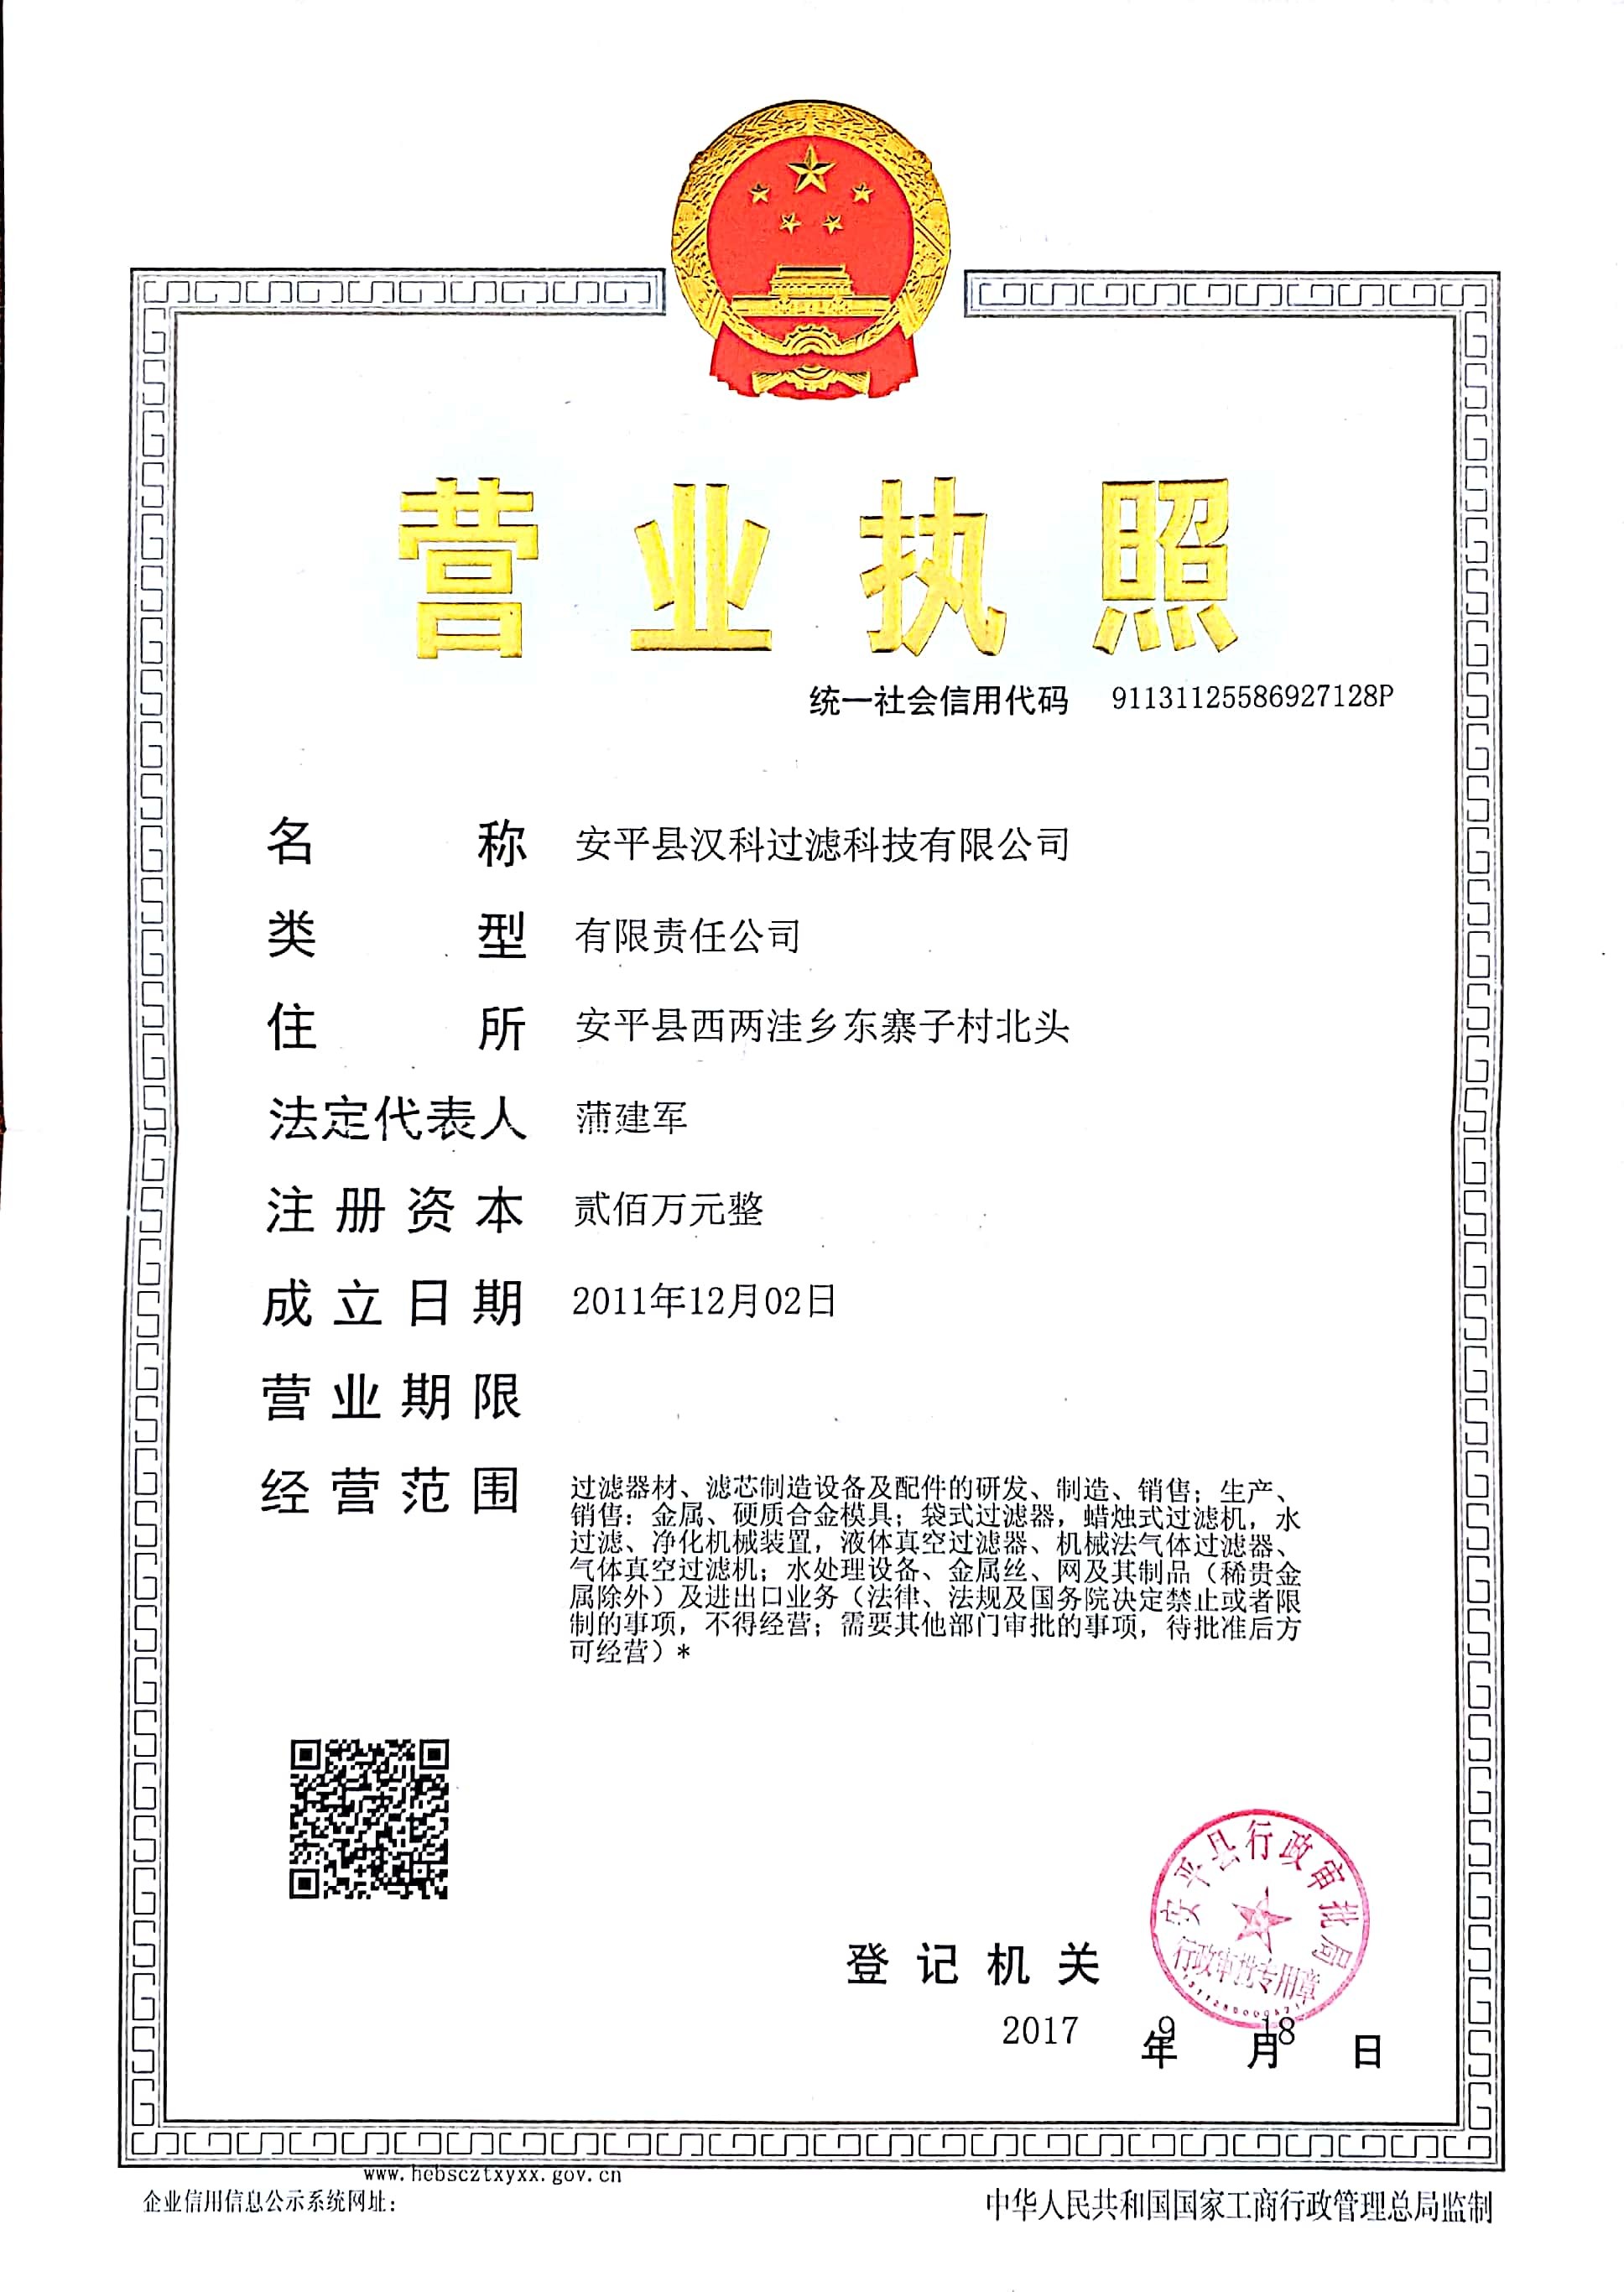 Anping Hanke Filtration Technology Co., Ltd Certifications